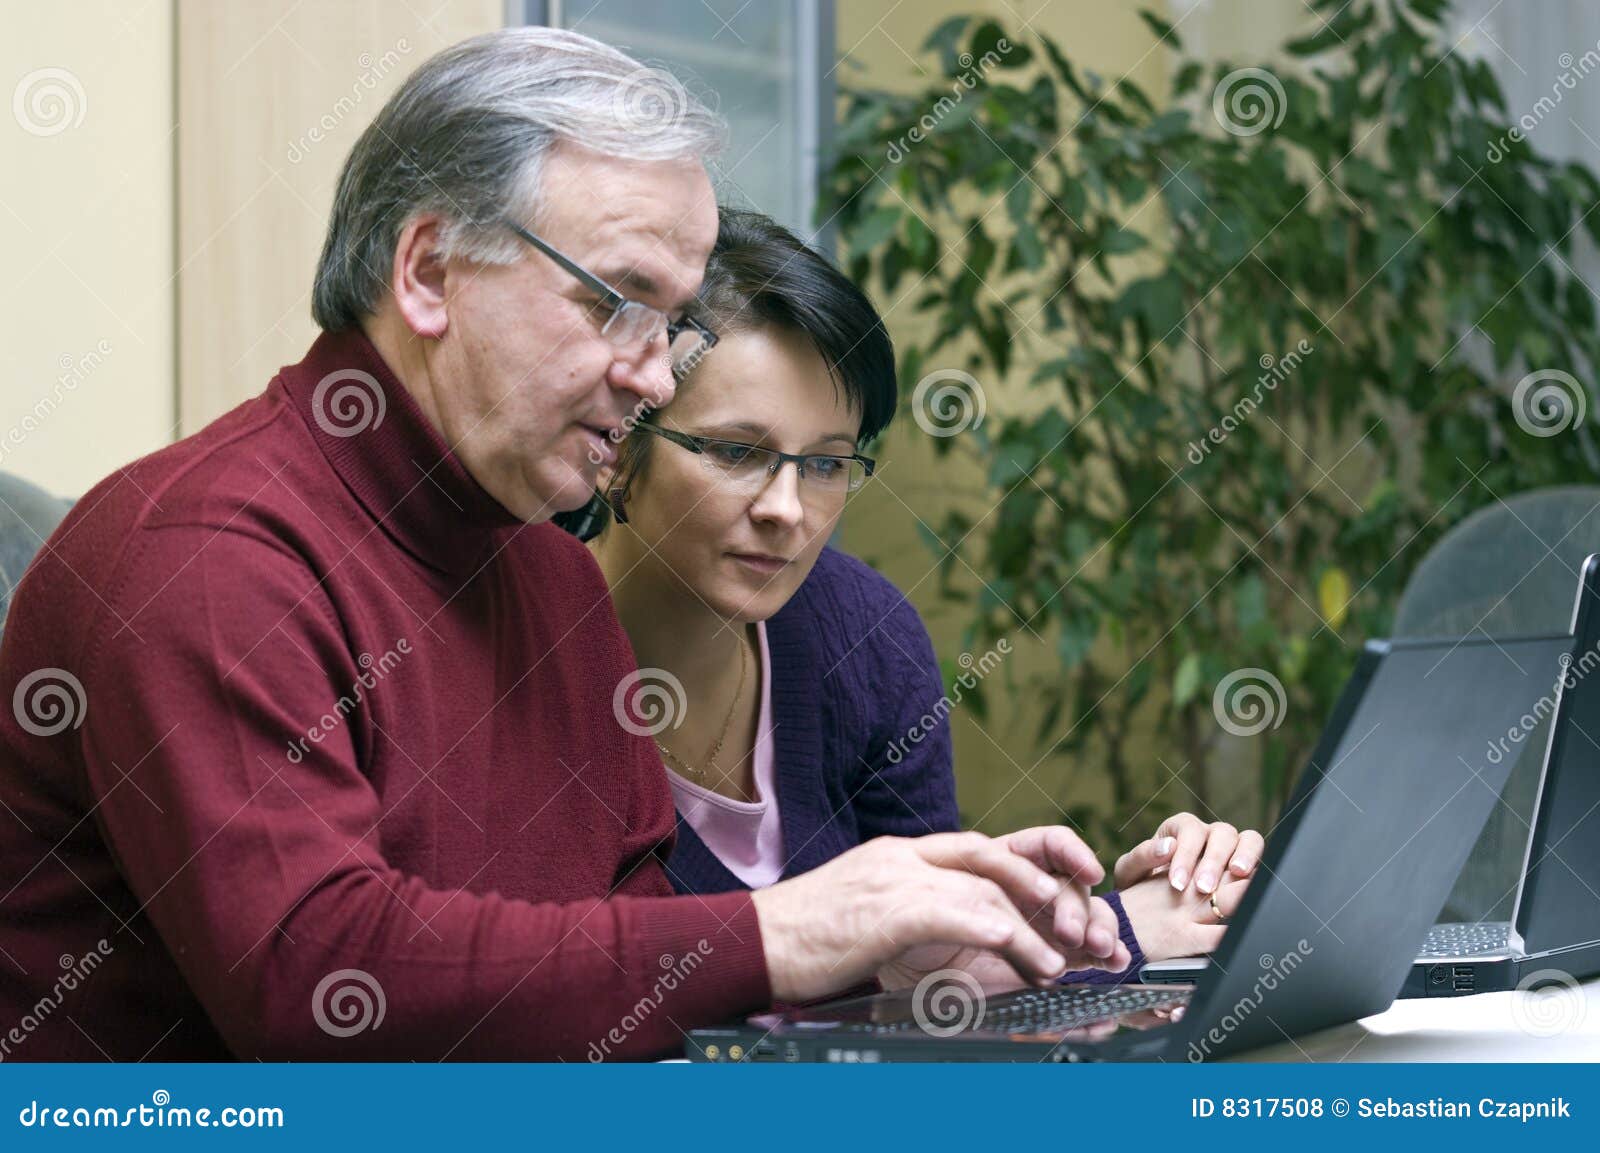 woman teaching senior use of computers